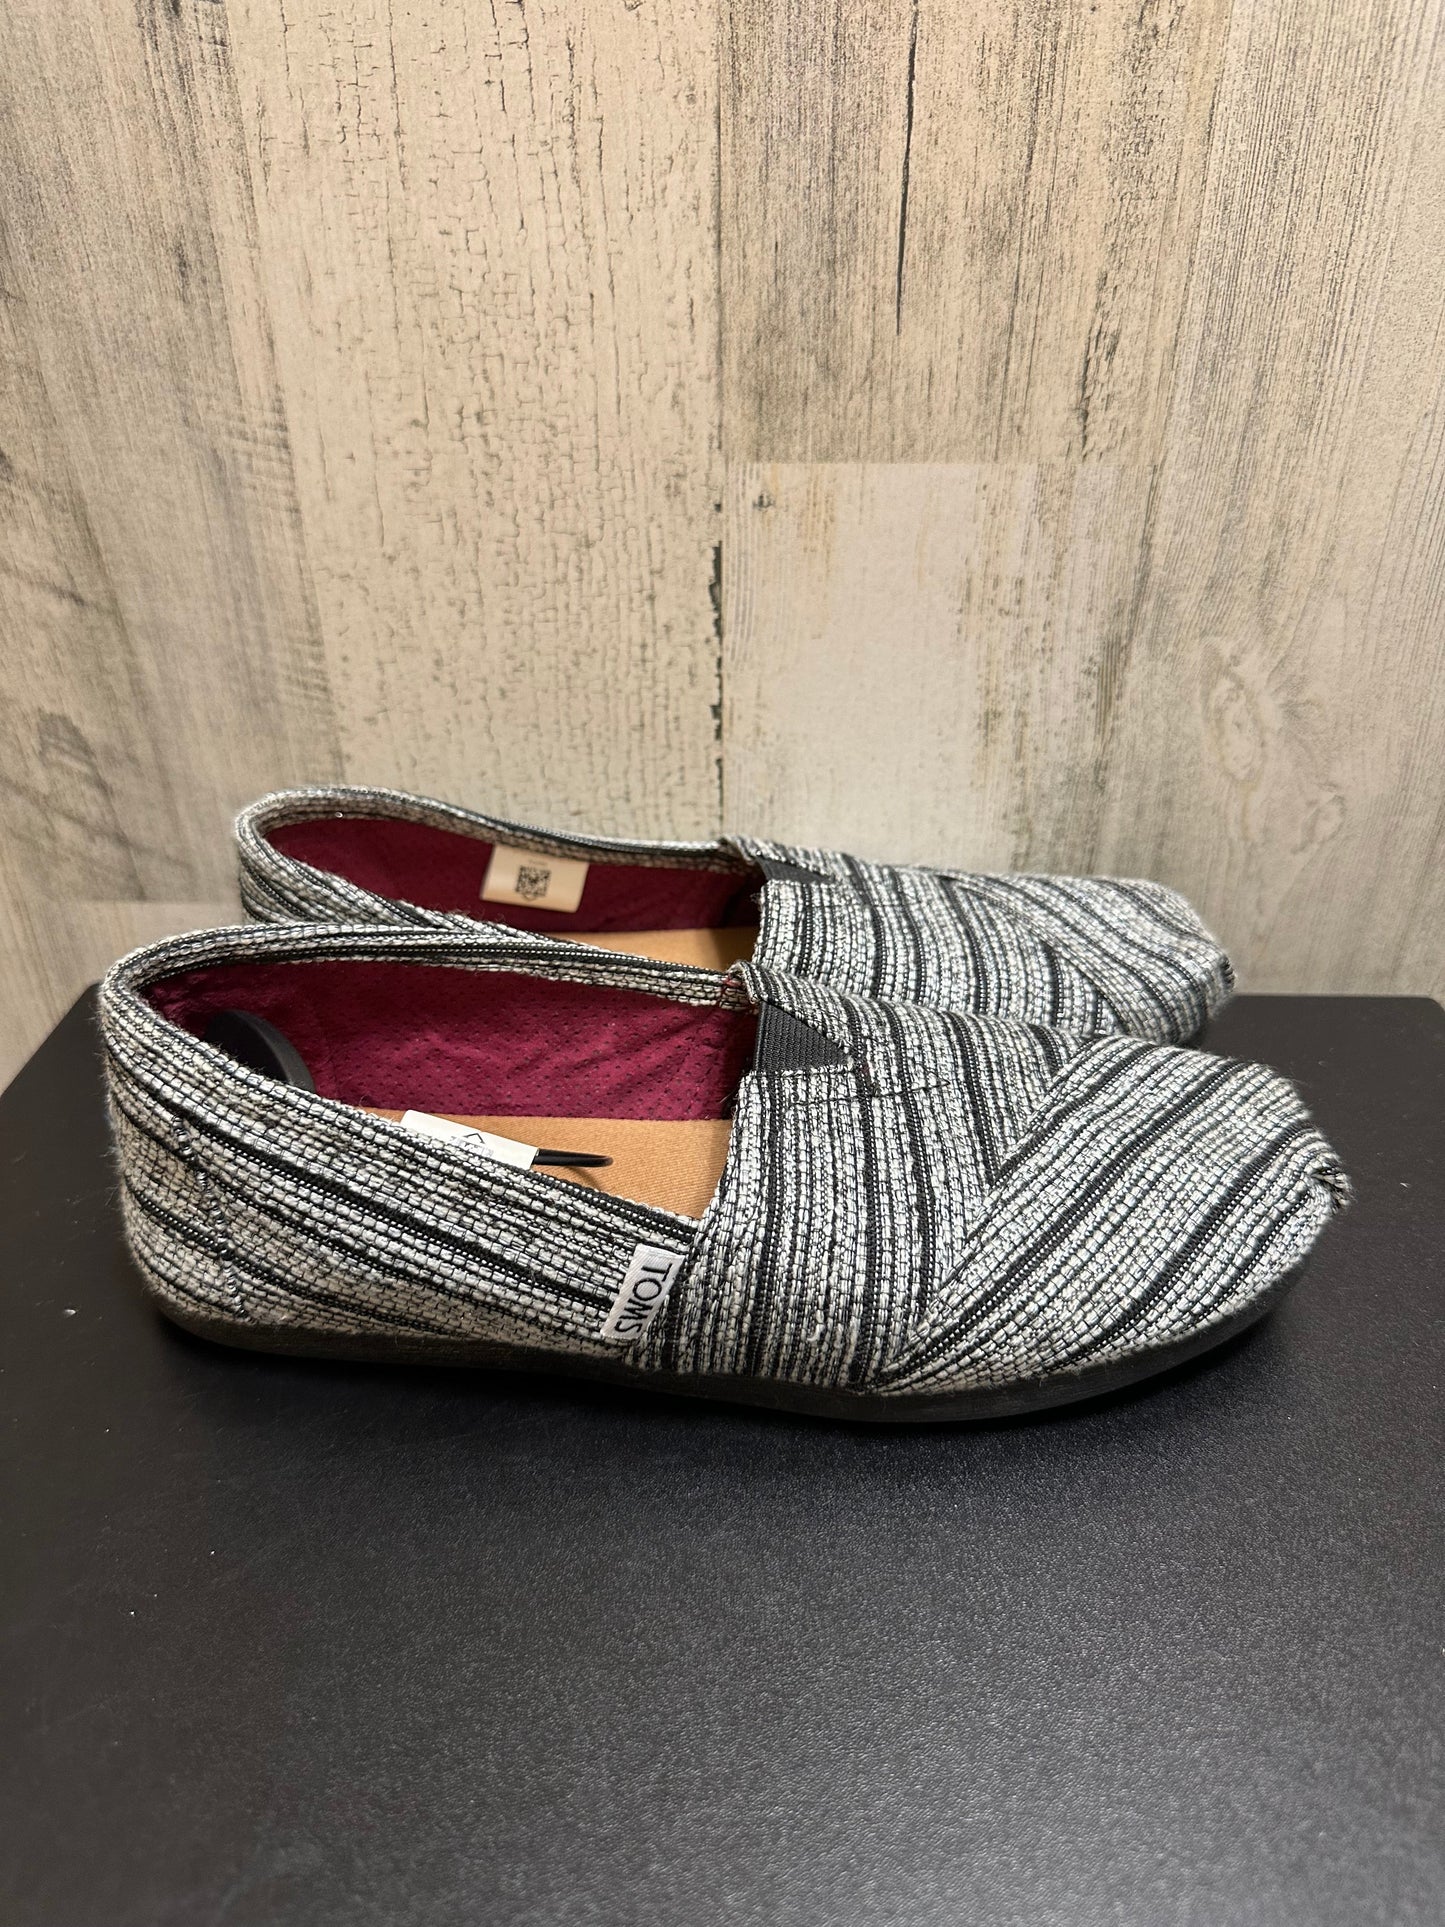 Grey Shoes Flats Toms, Size 6.5